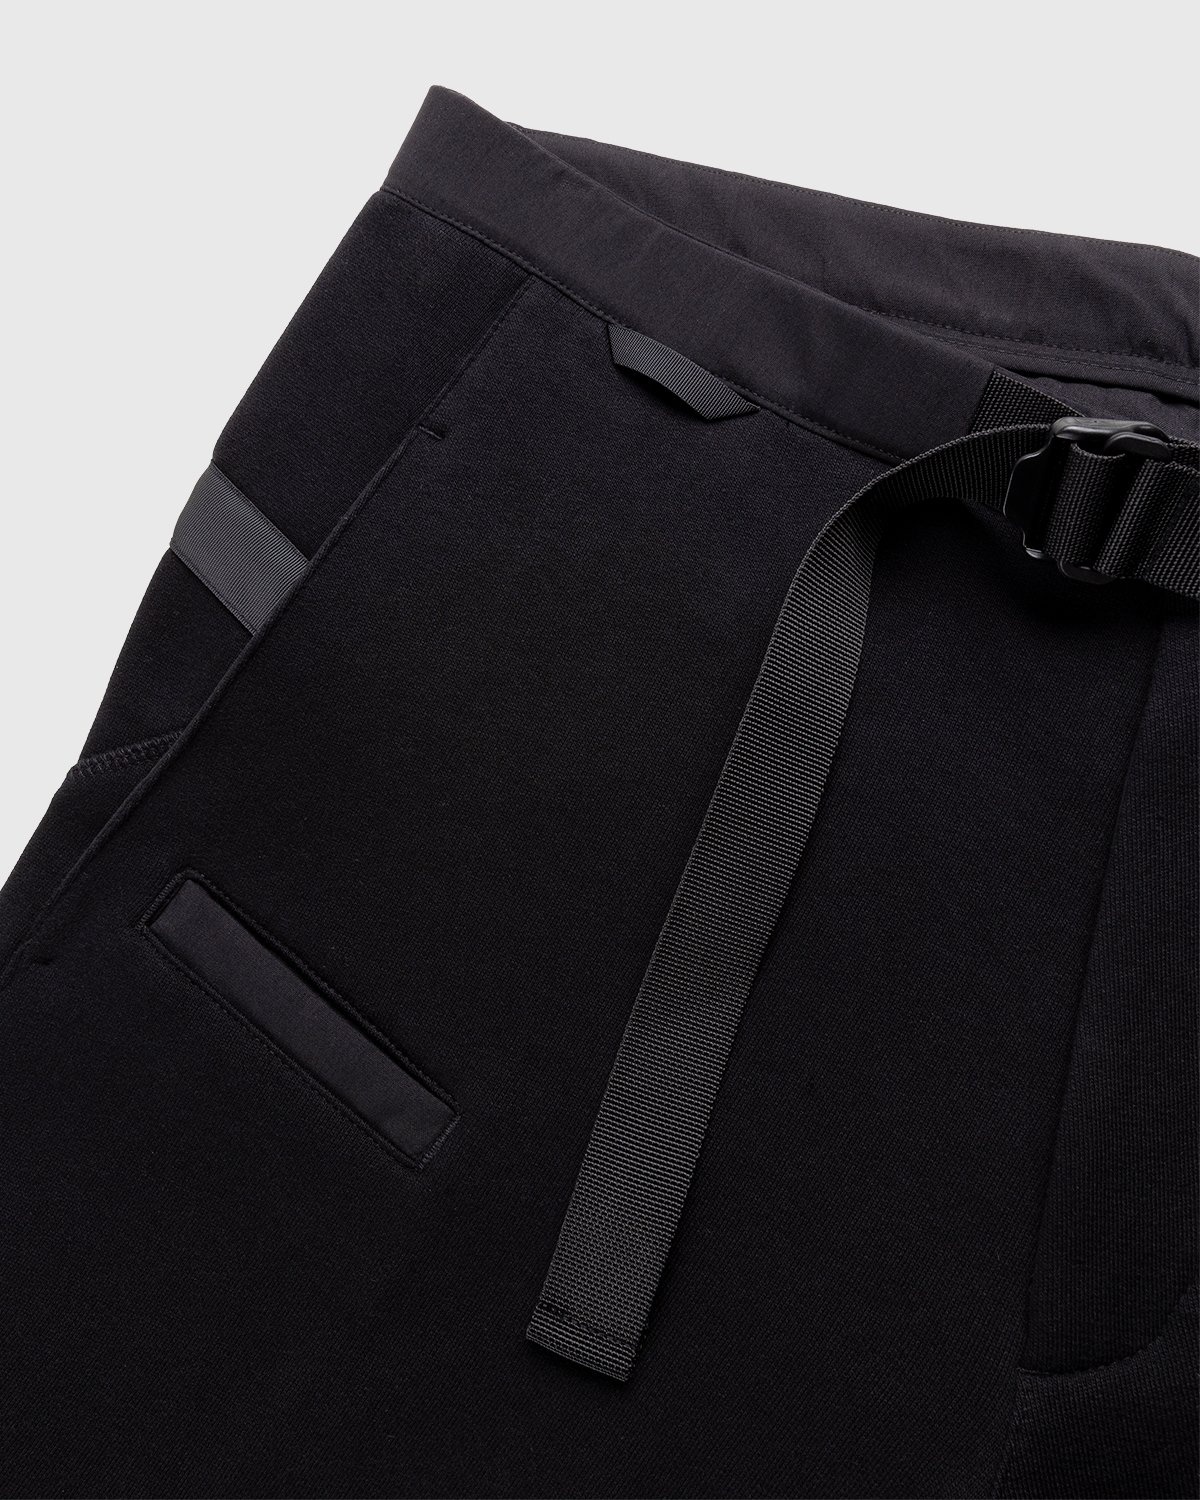 ACRONYM – P39-PR Pants Black - Pants - Black - Image 6